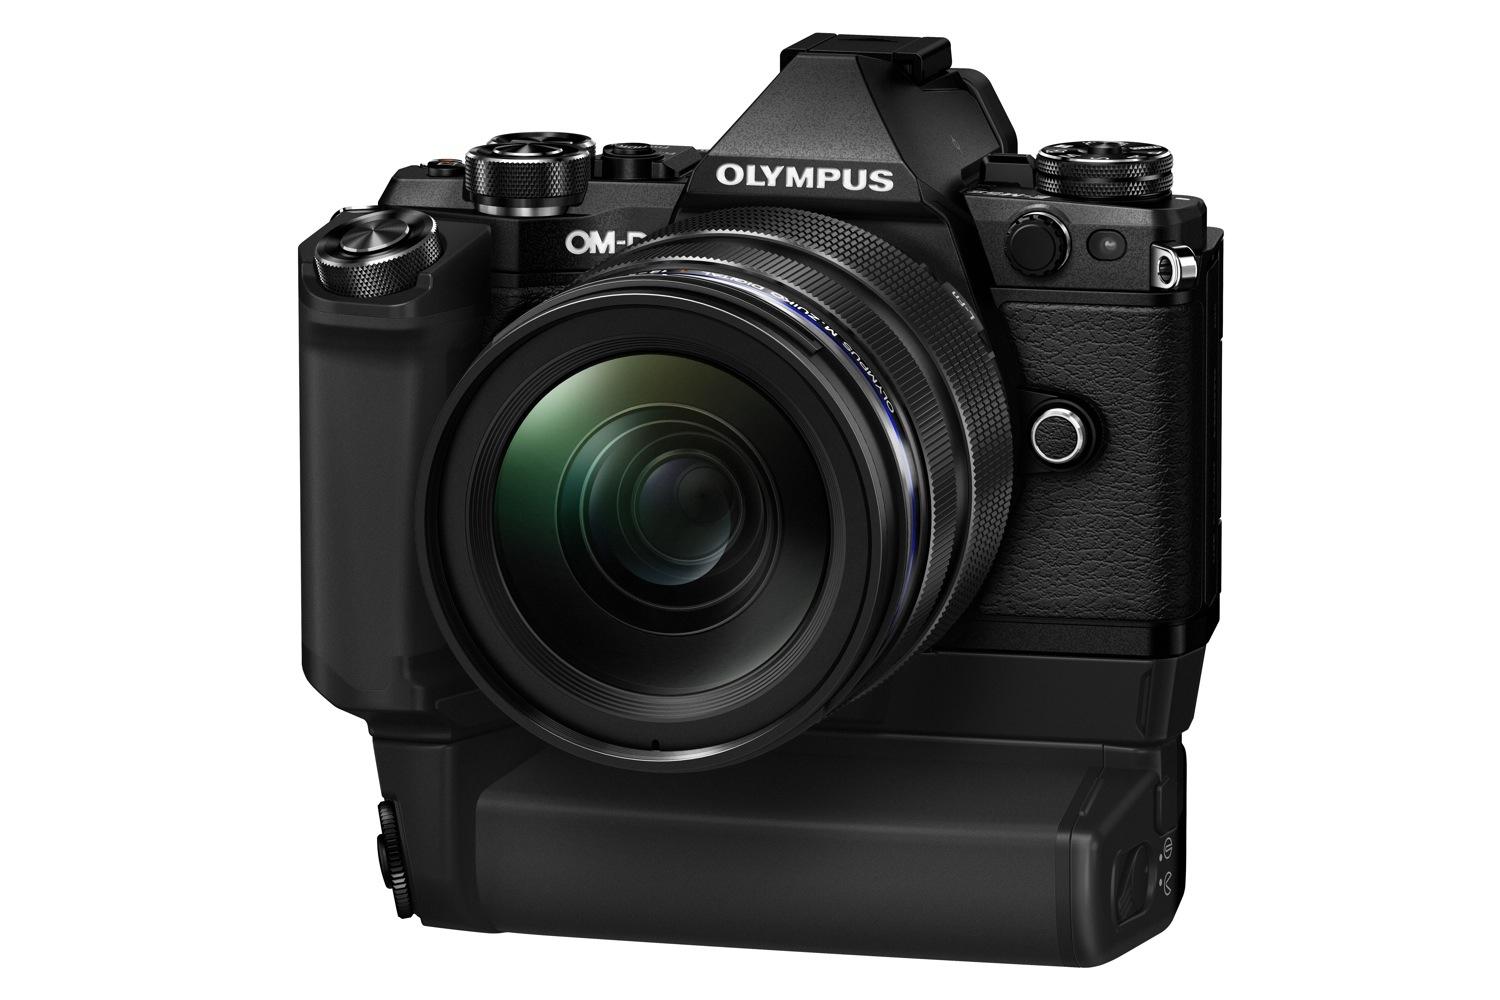 olympus e m5 mark ii puts focus movie stabilization 40 megapixel photos m5markii blk right m1240 hld8